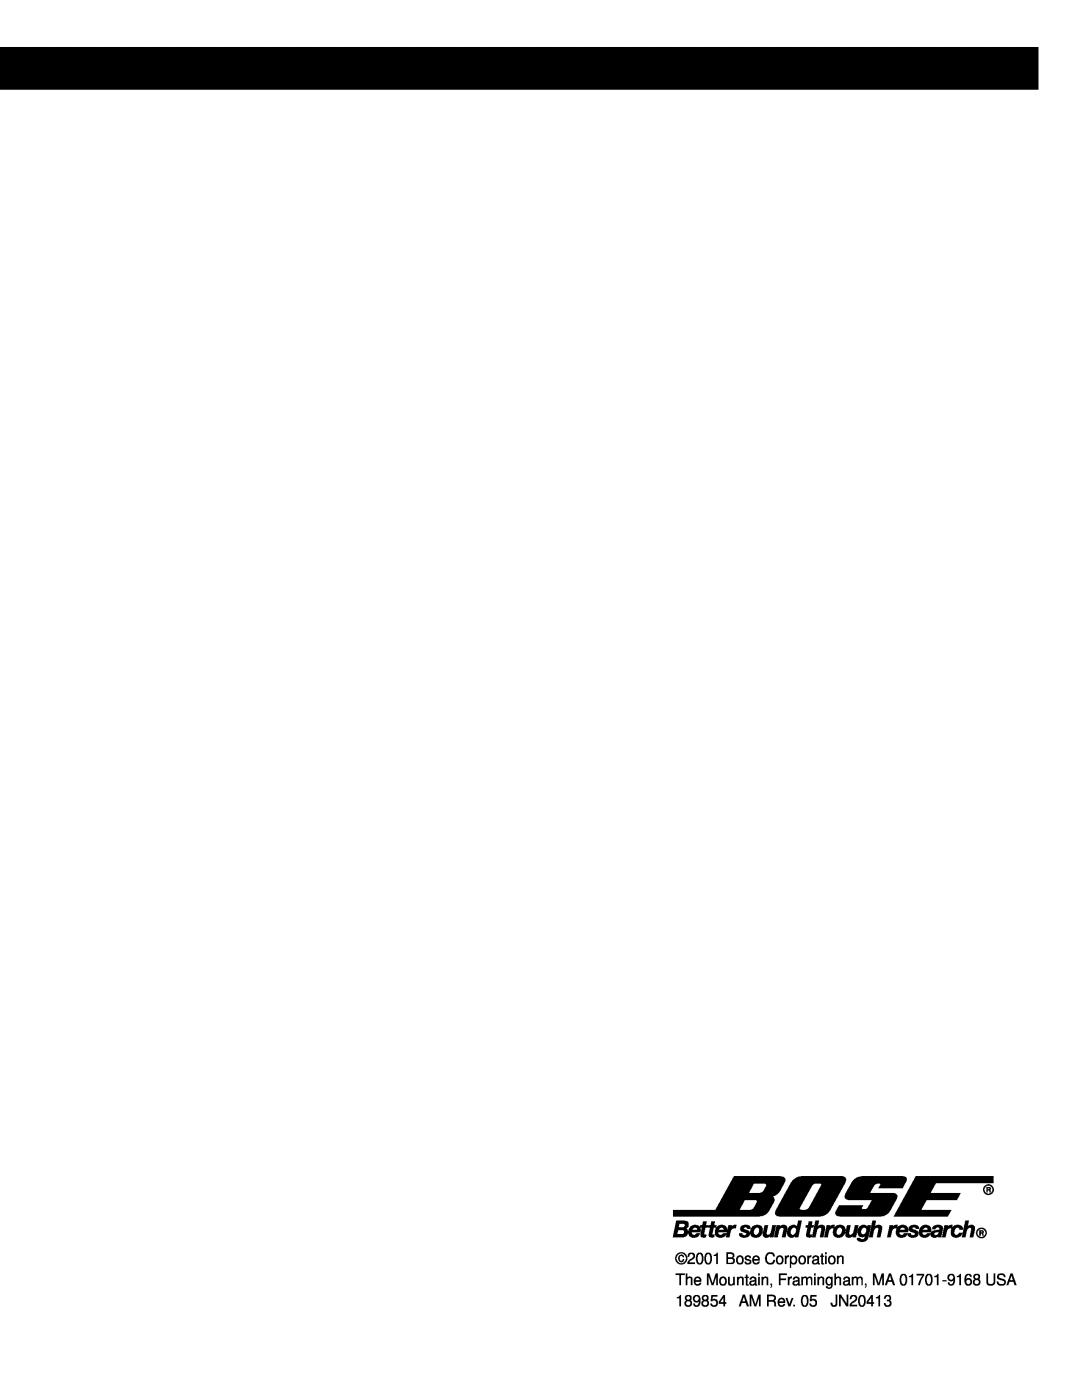 Bose 50 manual Bose Corporation, The Mountain, Framingham, MA 01701-9168USA, AM Rev. 05 JN20413 